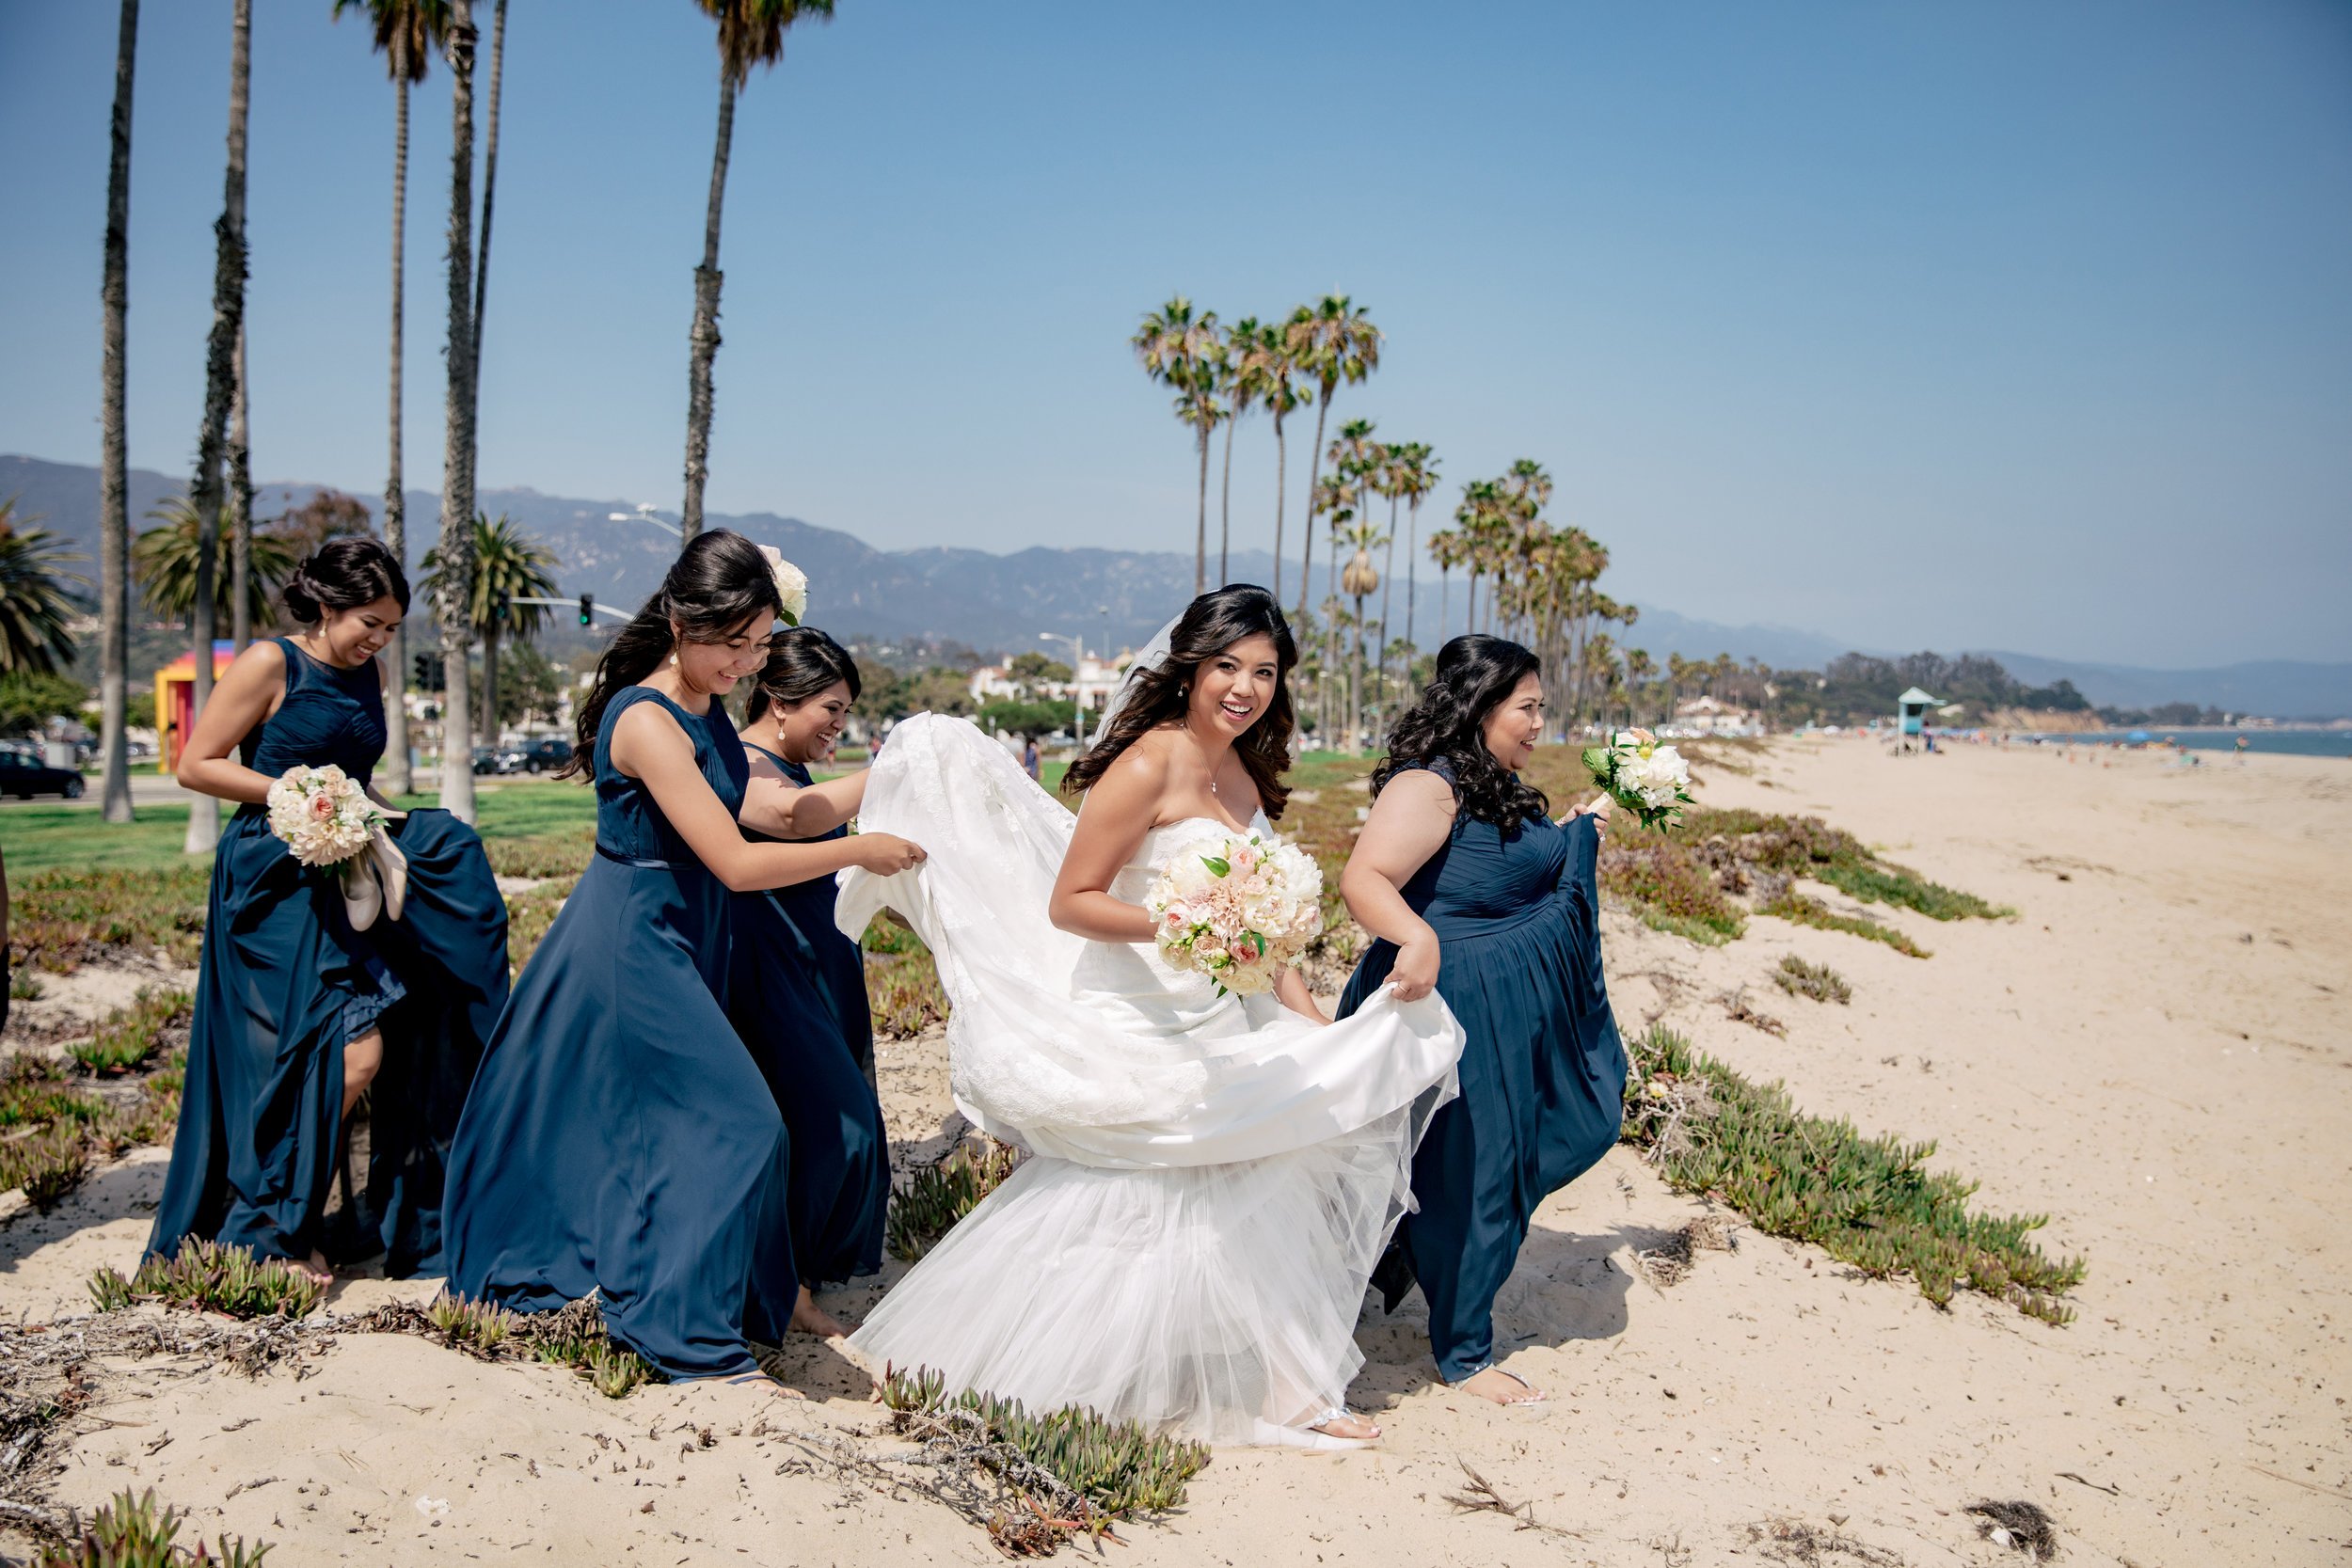 www.santabarbaraweddingstyle.com | Rewind Photography | Events by M and M | Hilton Santa Barbara | Bridesmaids and Bride